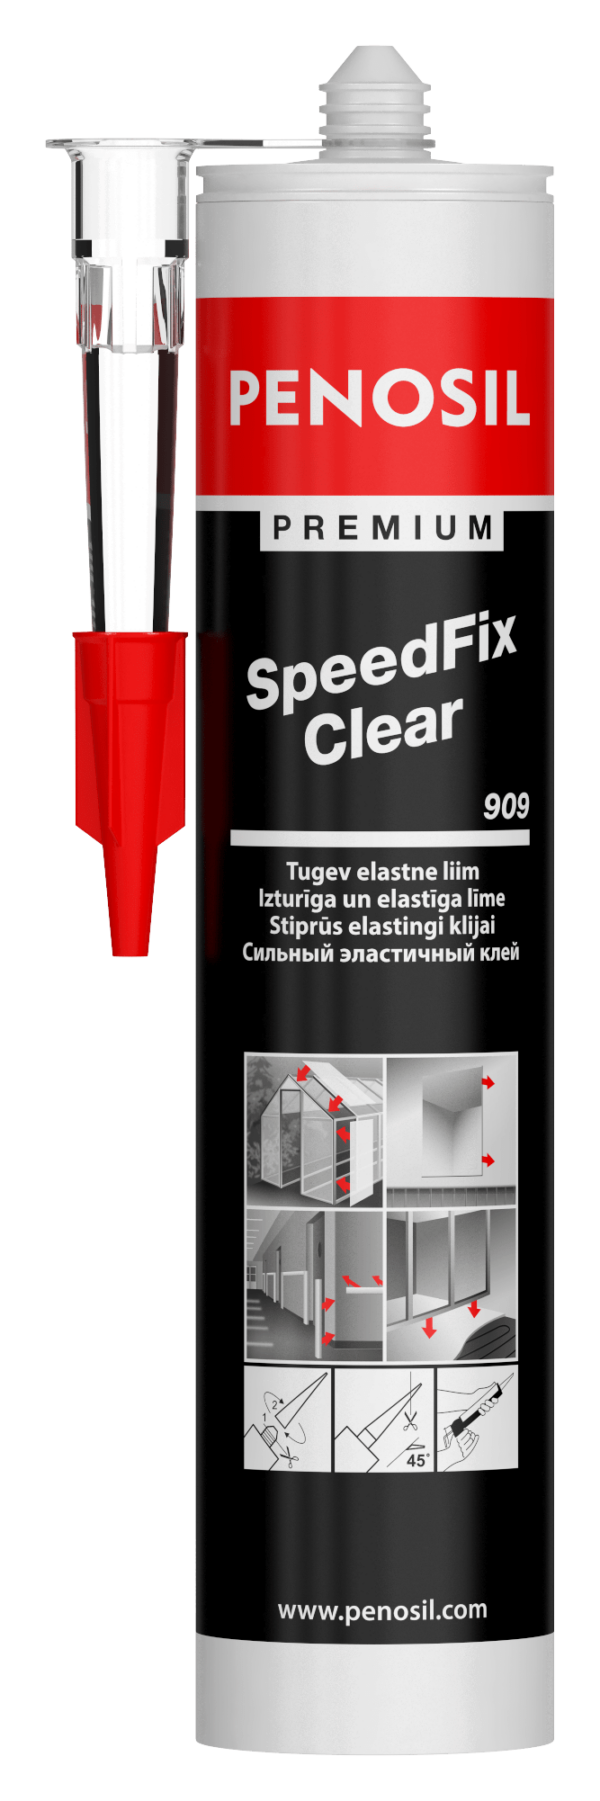 PENOSIL Premium SpeedFix Clear 909 transparentní lepidlo